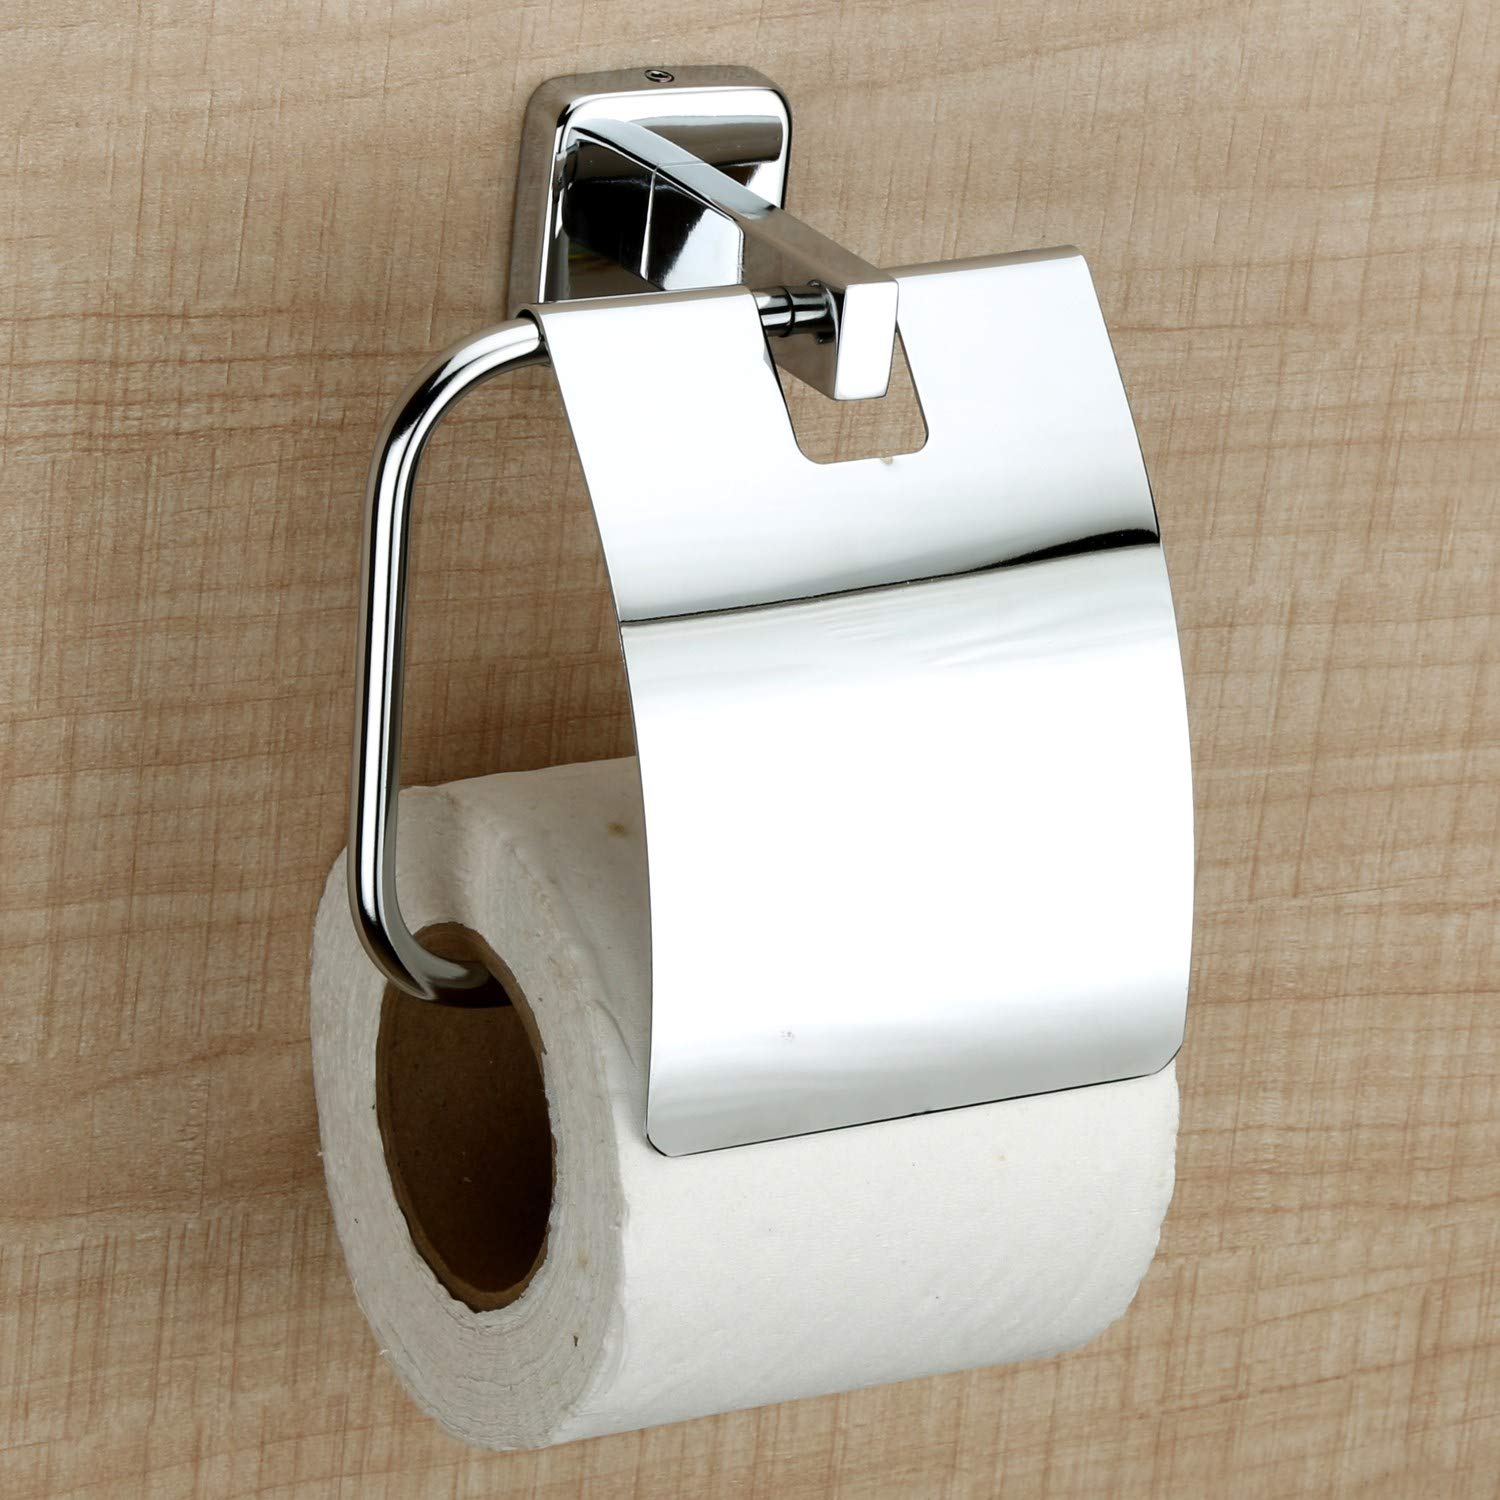 Plantex Nexa Stainless Steel Toilet Paper Roll Holder/Toilet Paper Holder in Bathroom/Kitchen/Bathroom Accessories (Chrome) - Pack of 1